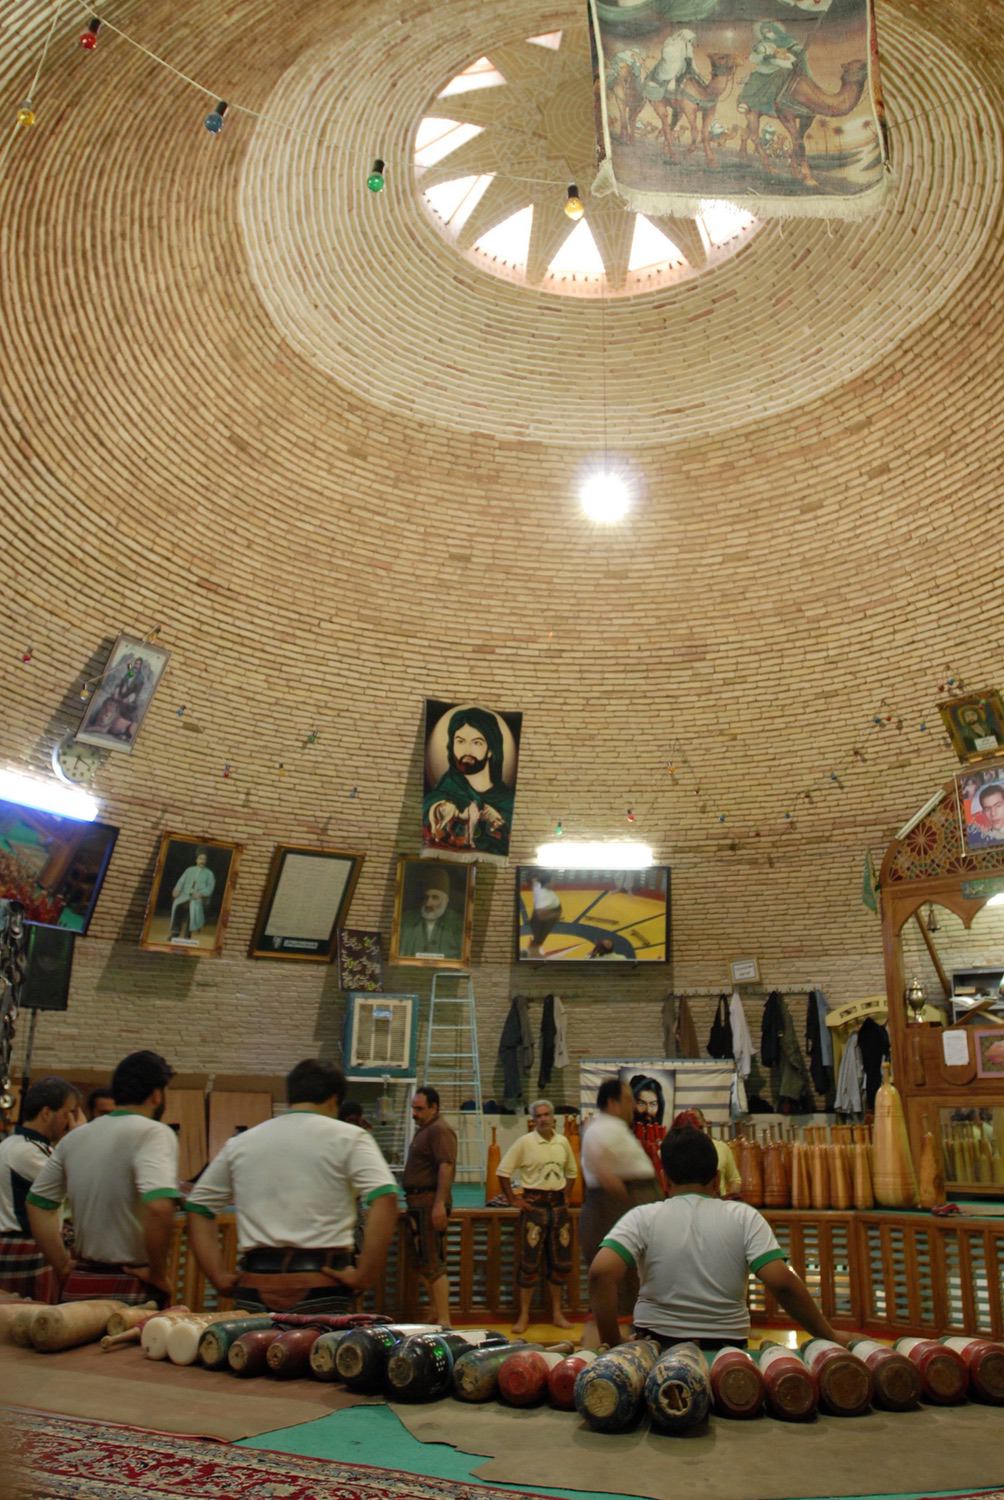 Gunbad (dome) at the Zurkhaneh Sahib-i Zaman